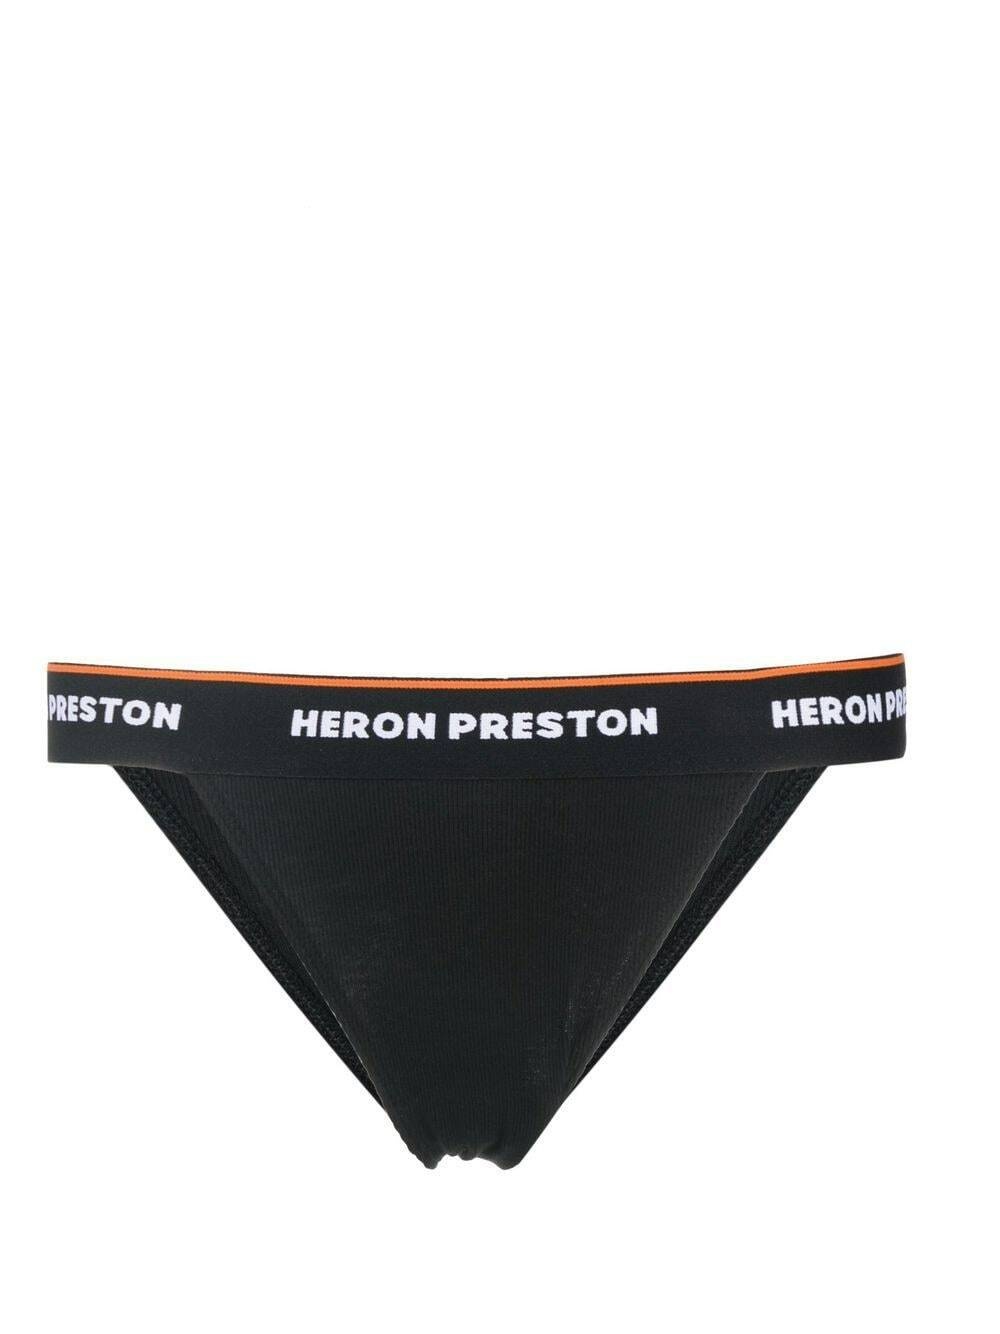 HERON PRESTON - Logo Brief Heron Preston